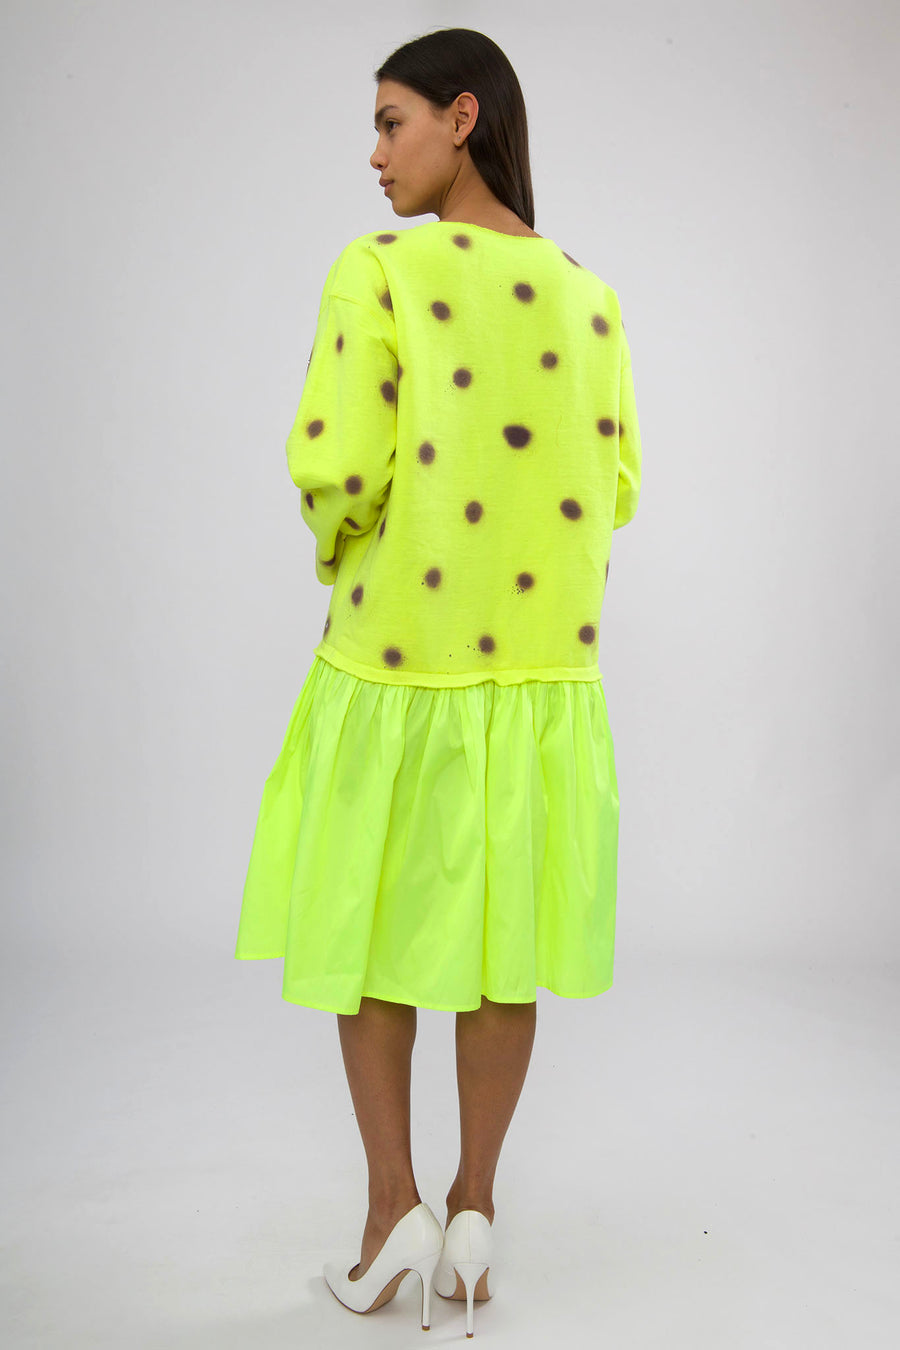 BATSHEVA - Neon Yellow Sweatshirt Dress with Purple Polka Dots and Rhinestones